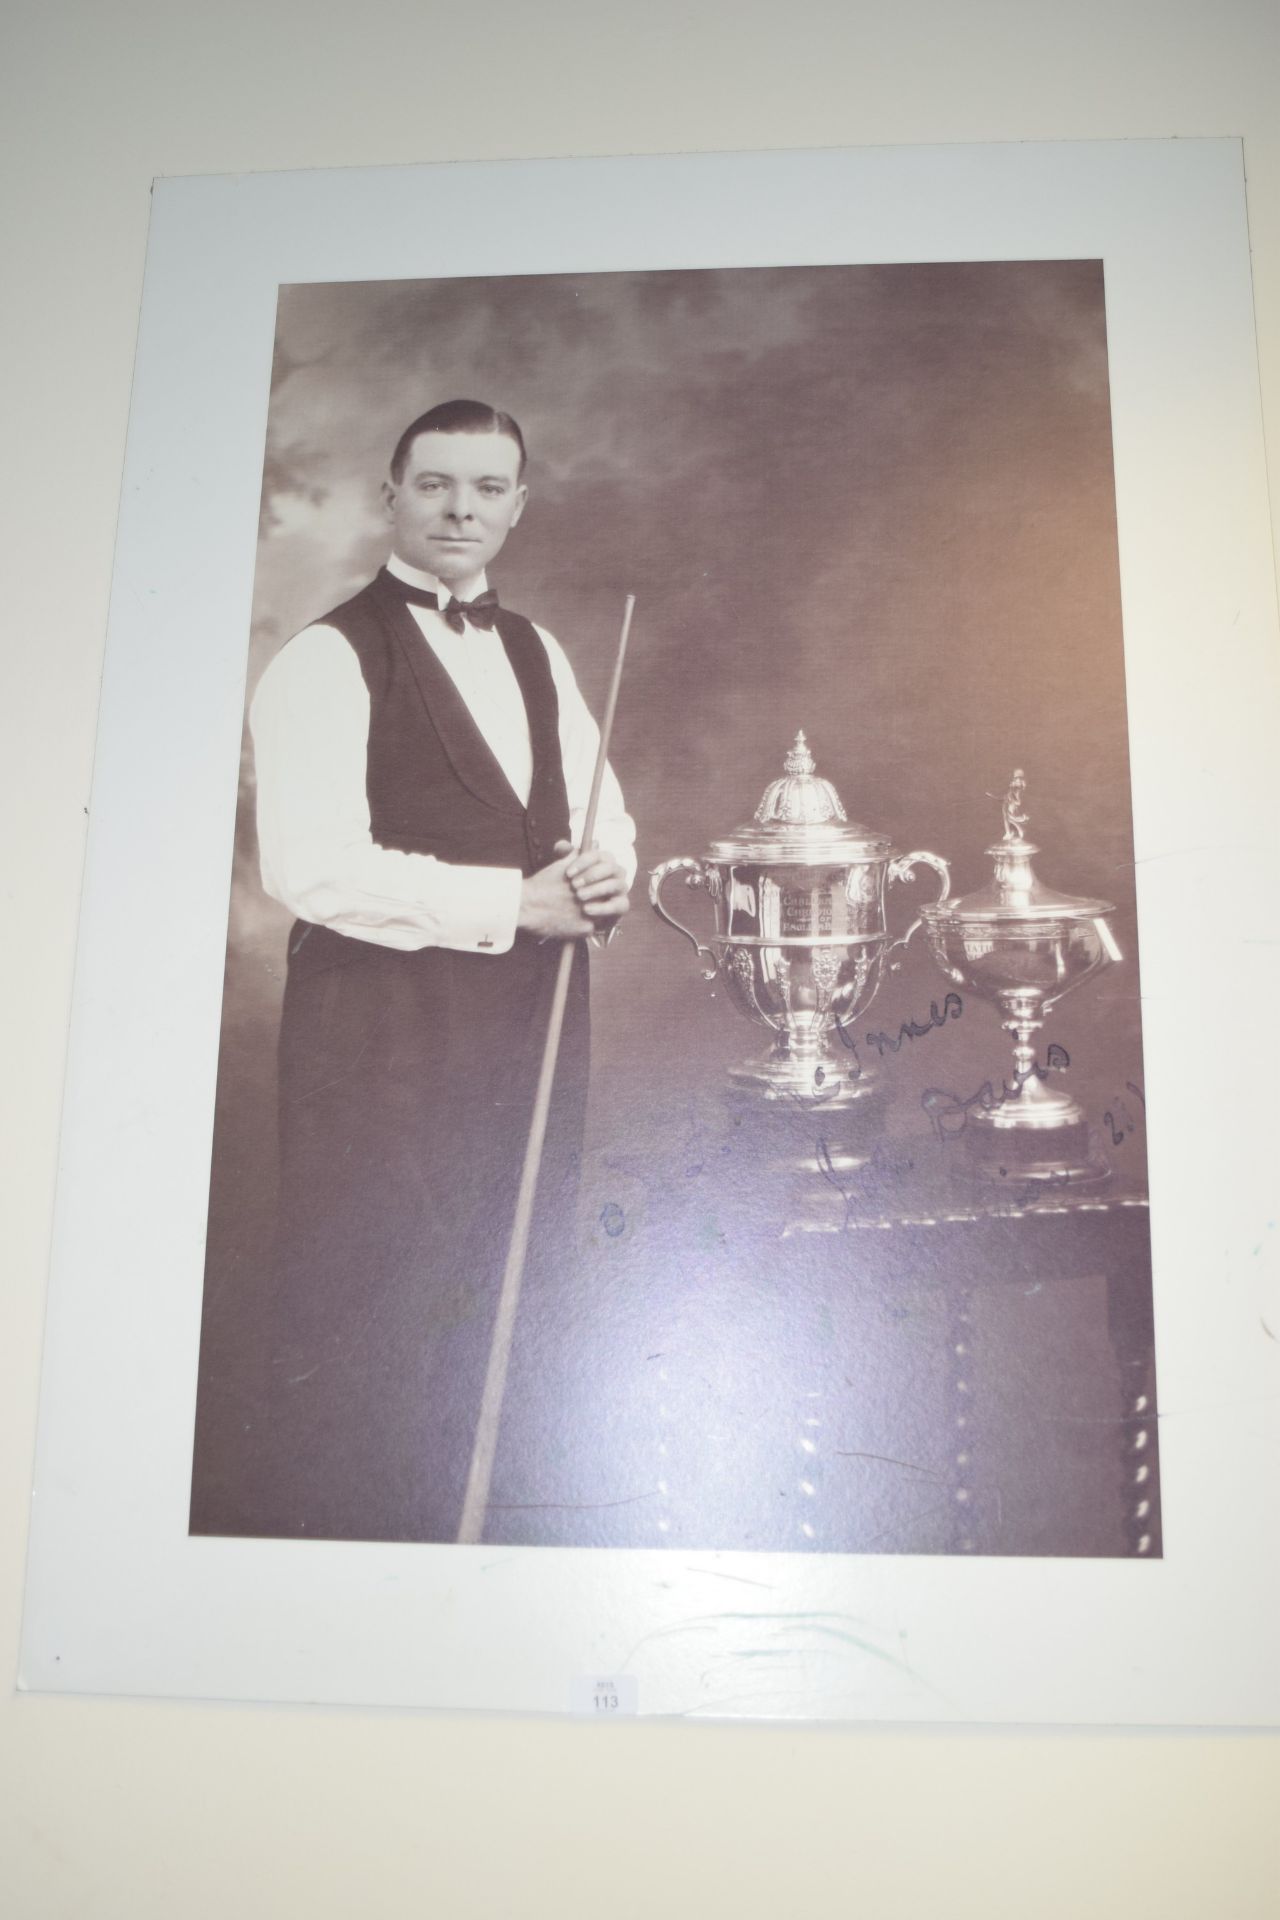 Poster of Championship Snooker billiard player Joe Davis, width approx 77cm